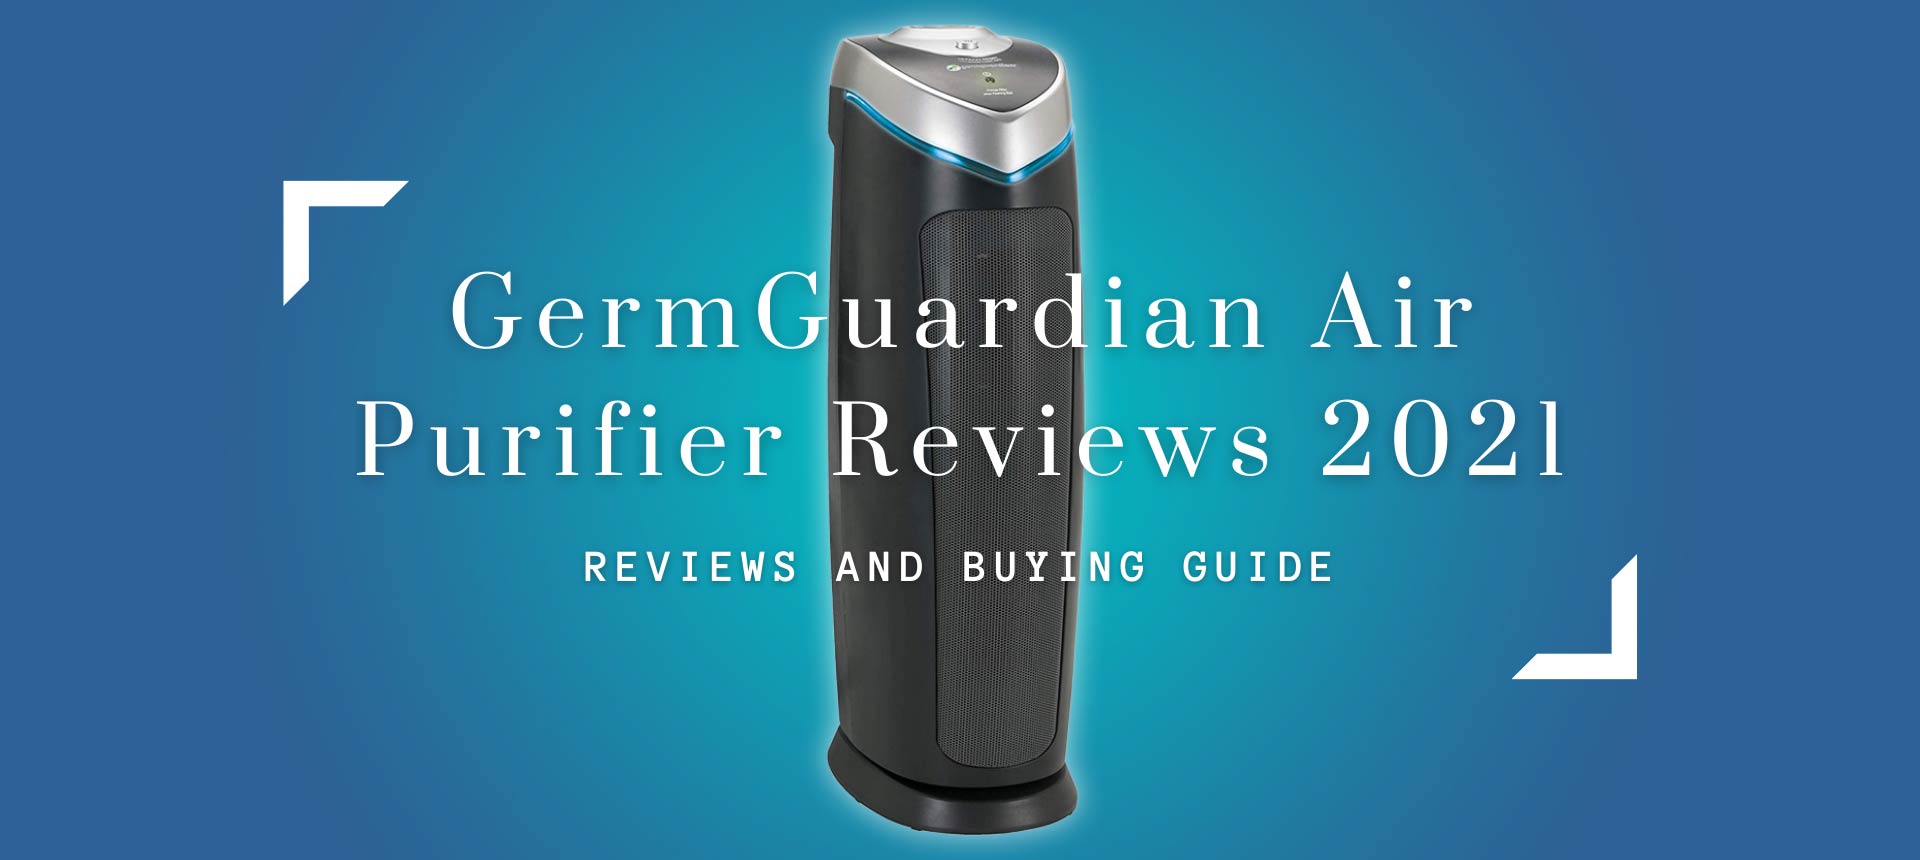 GermGuardian Air Purifier Reviews 2021, Best Models